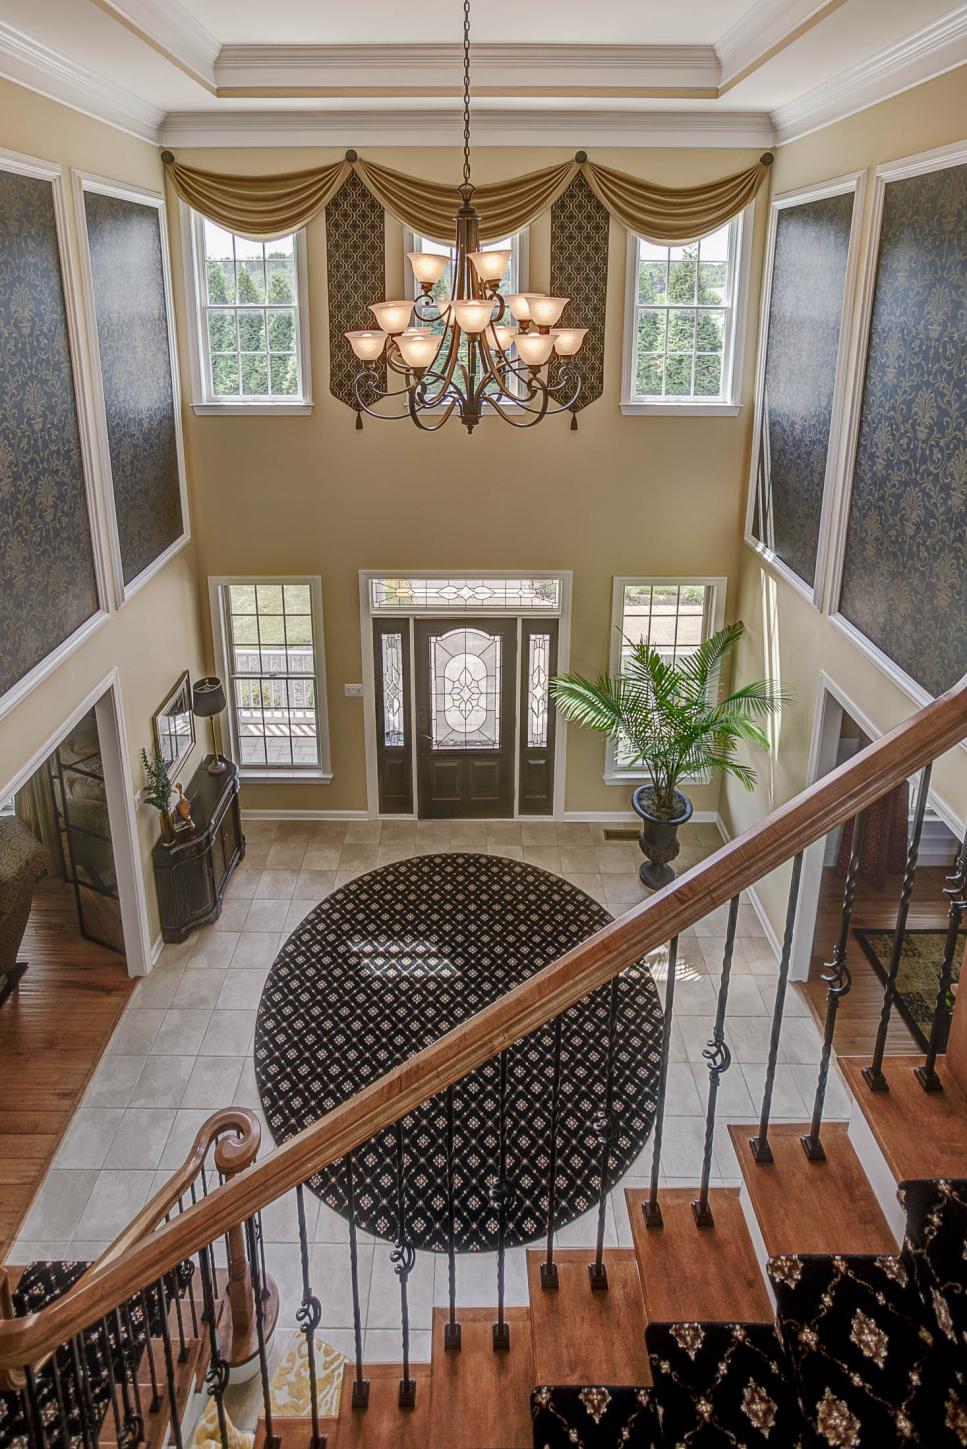 Grand Foyer Boasts Lofty Ceiling and Elegant Chandelier | HGTV